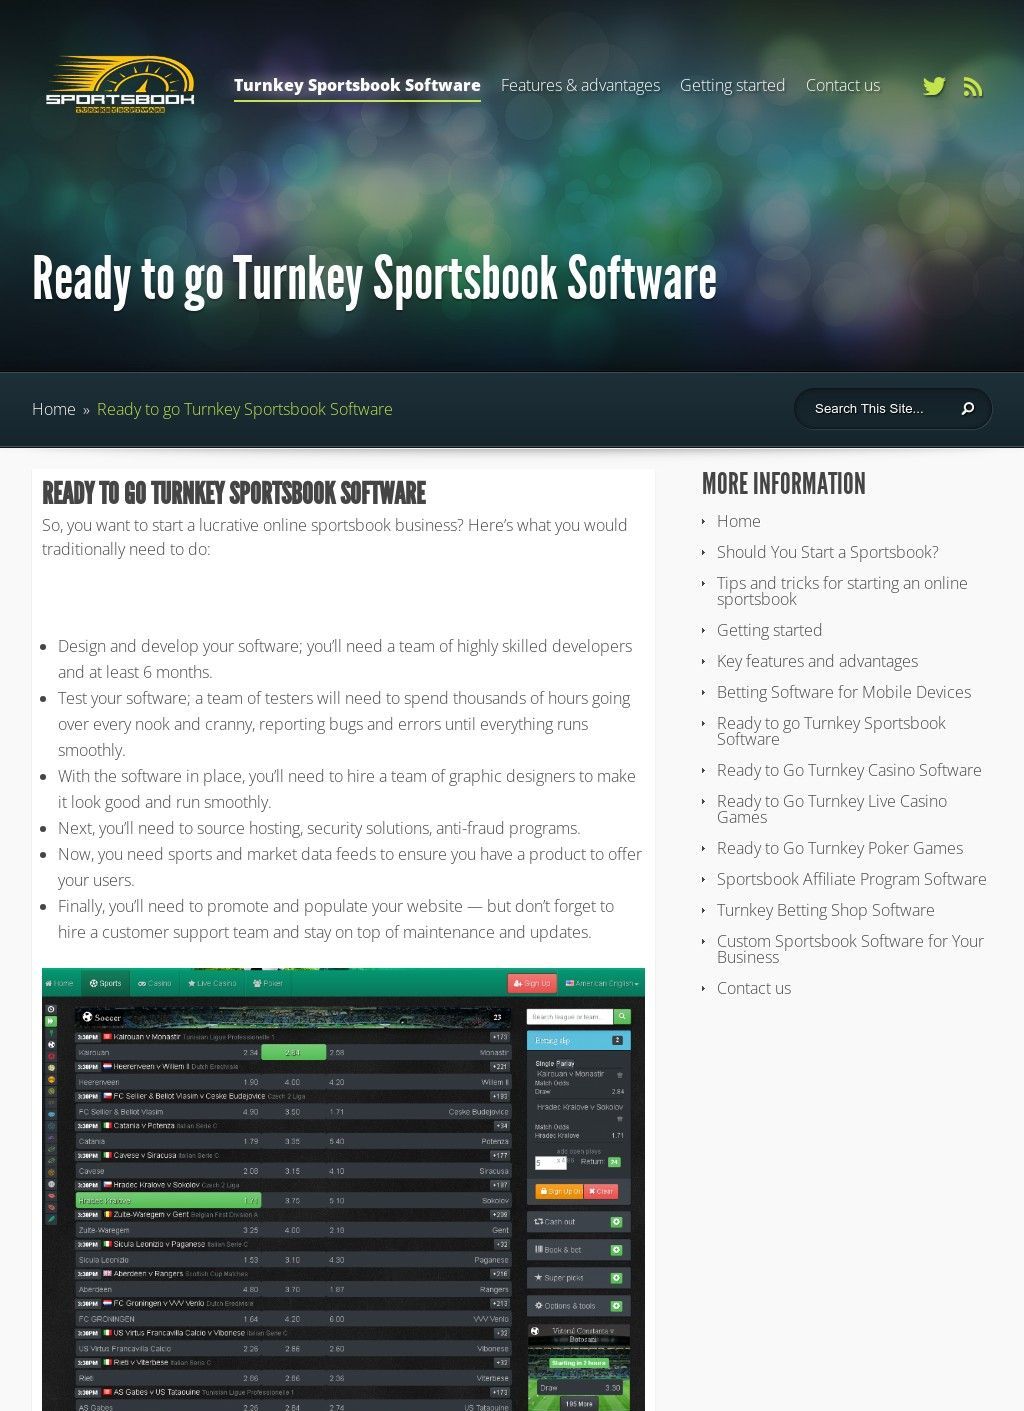 TurnkeySportsbookSoftware.com